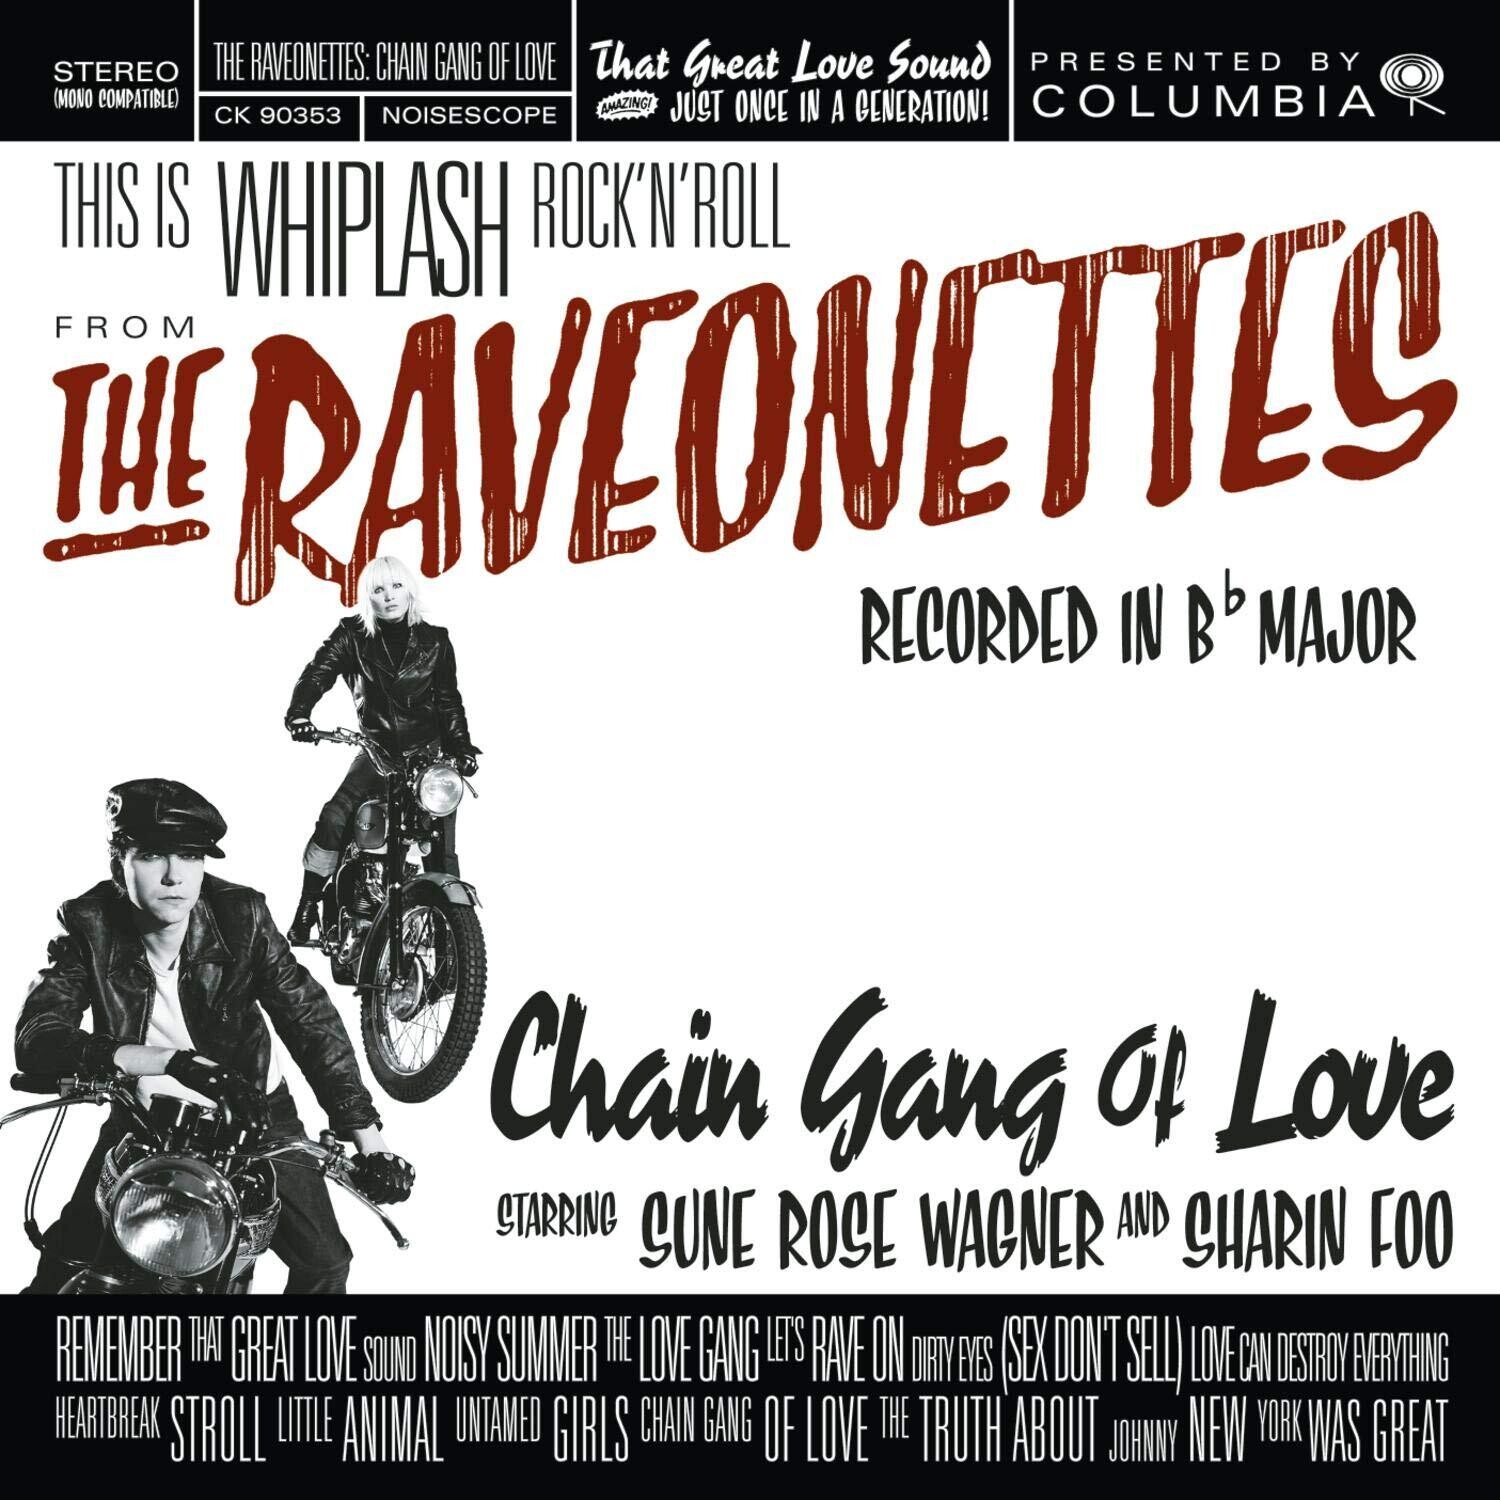 The Raveonettes "Chain Gang Of Love" Ltd. Ed. on Translucent Red Vinyl